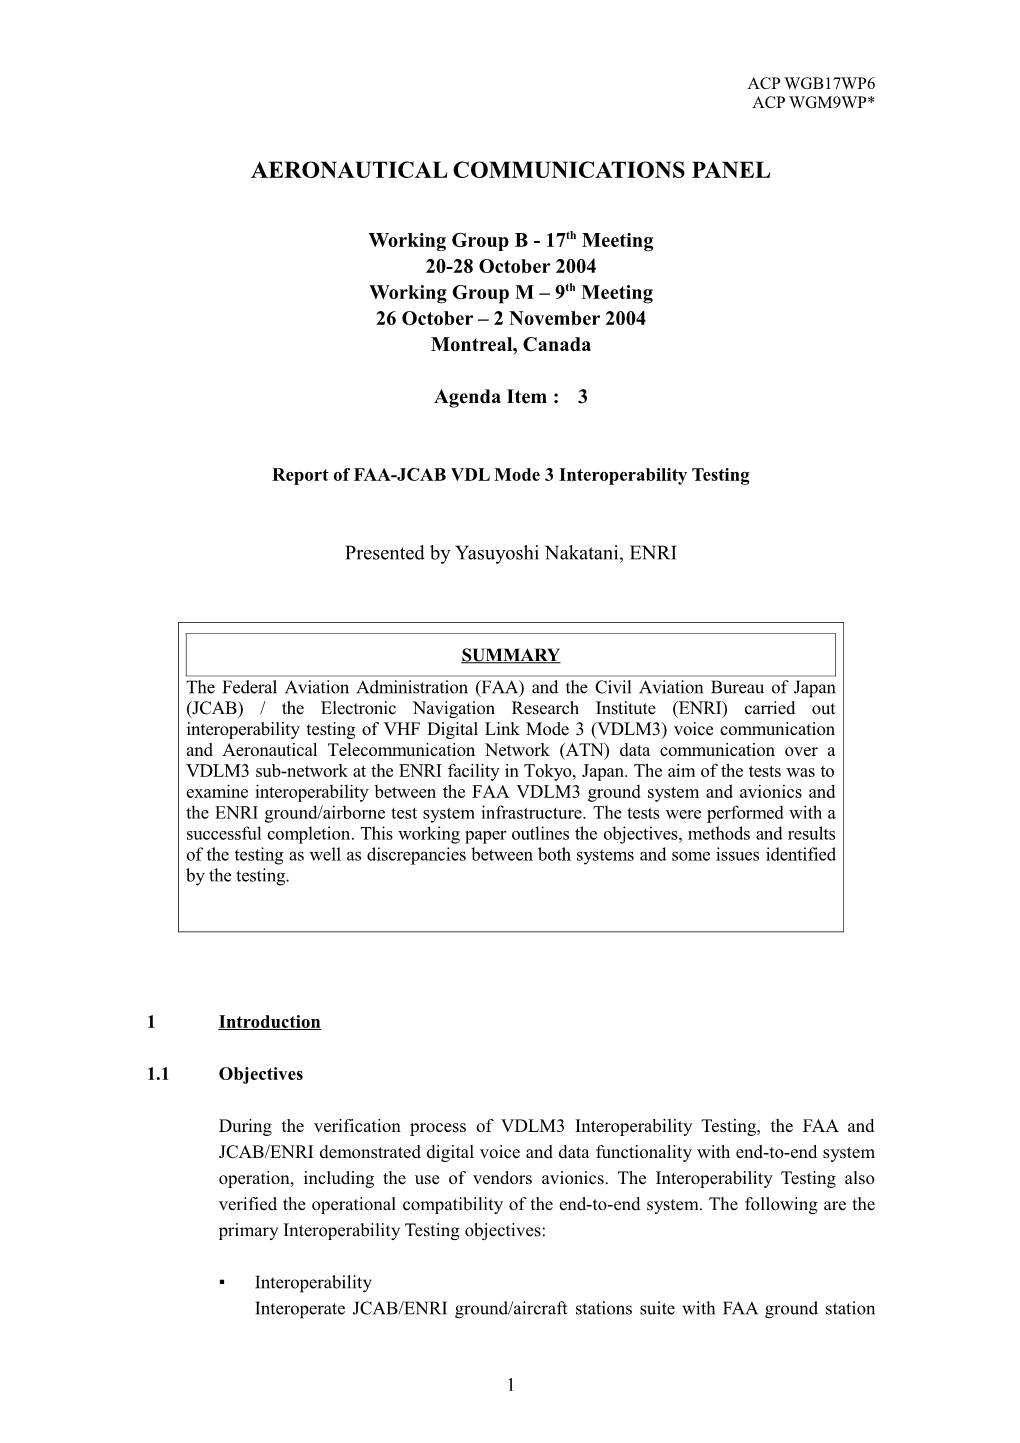 Report of FAA-JCAB VDL Mode 3 Interoperability Testing